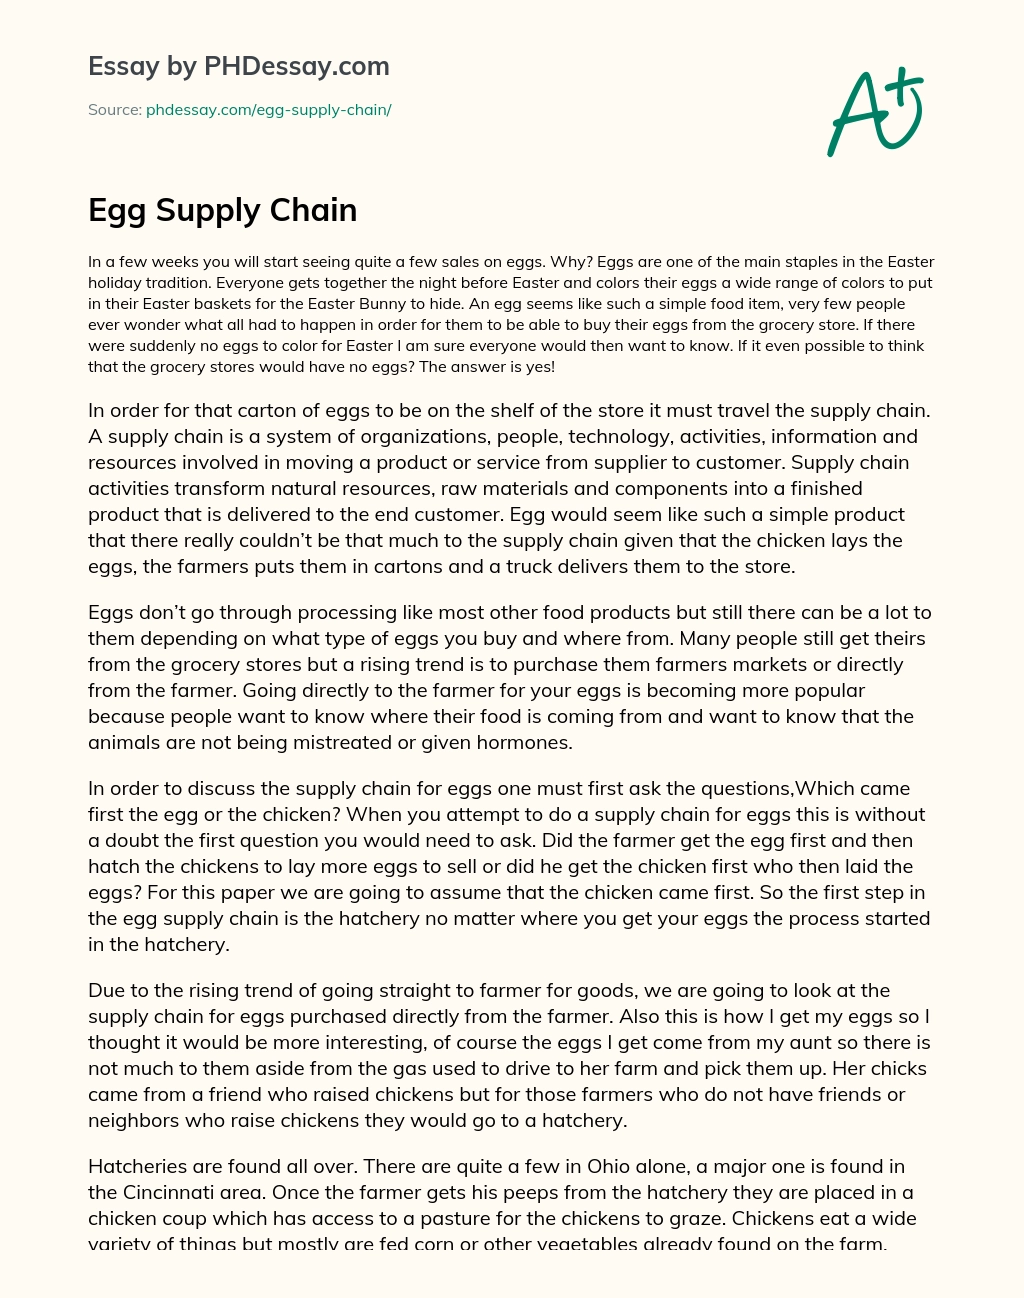 Egg Supply Chain essay